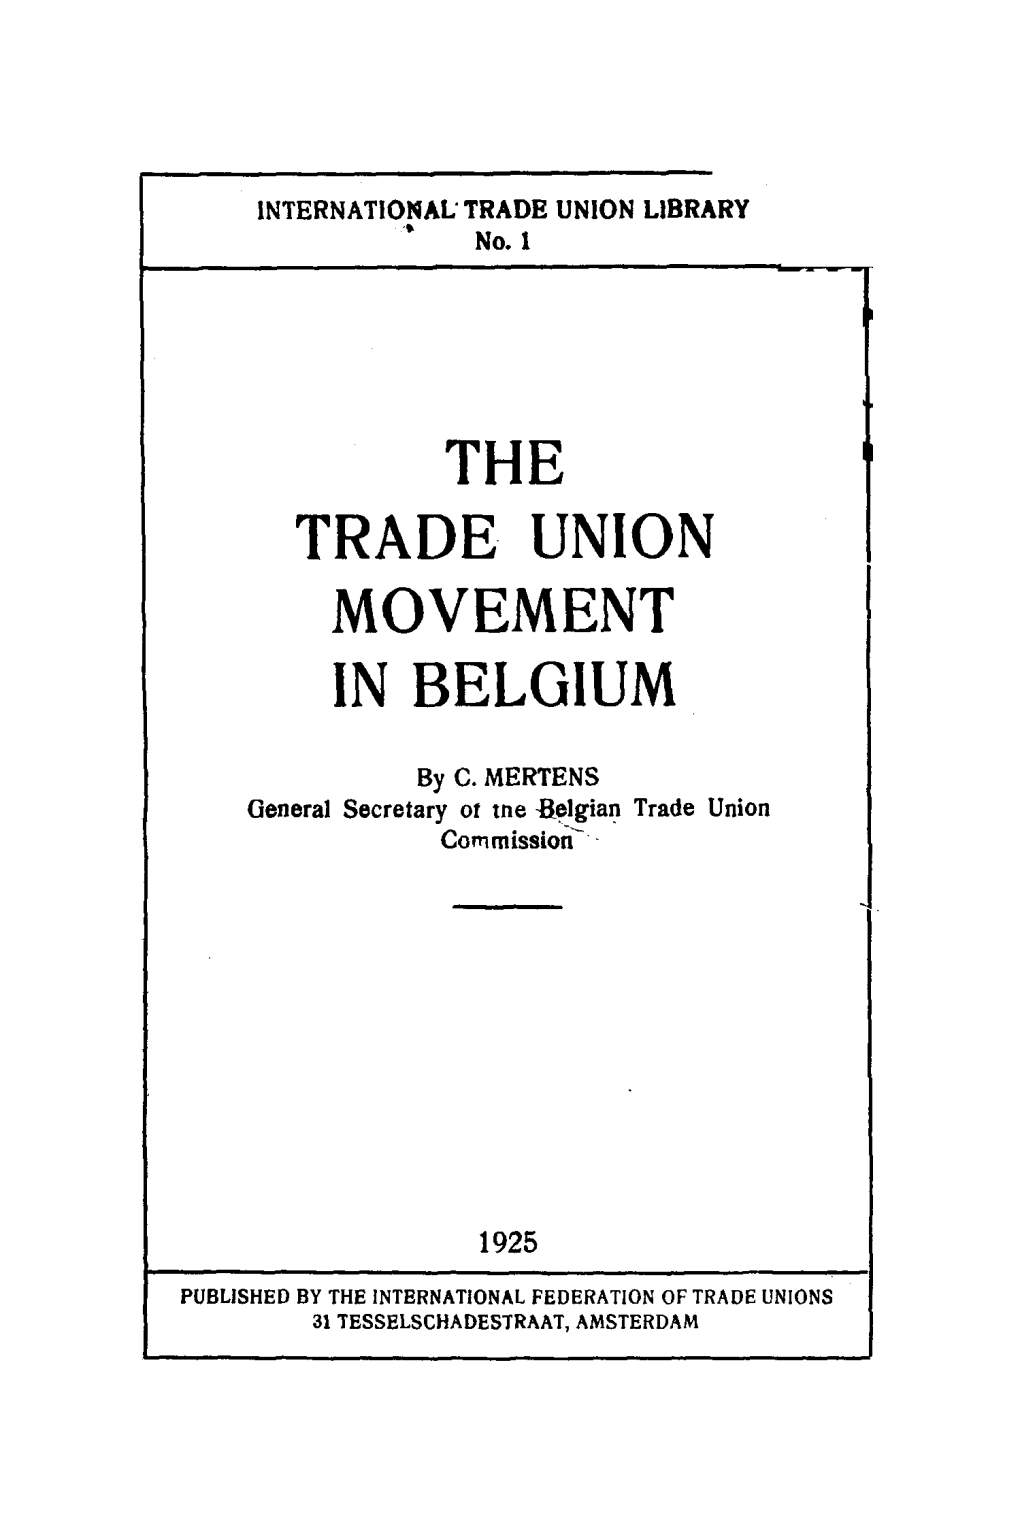 The Trade Union Movement in Belgium